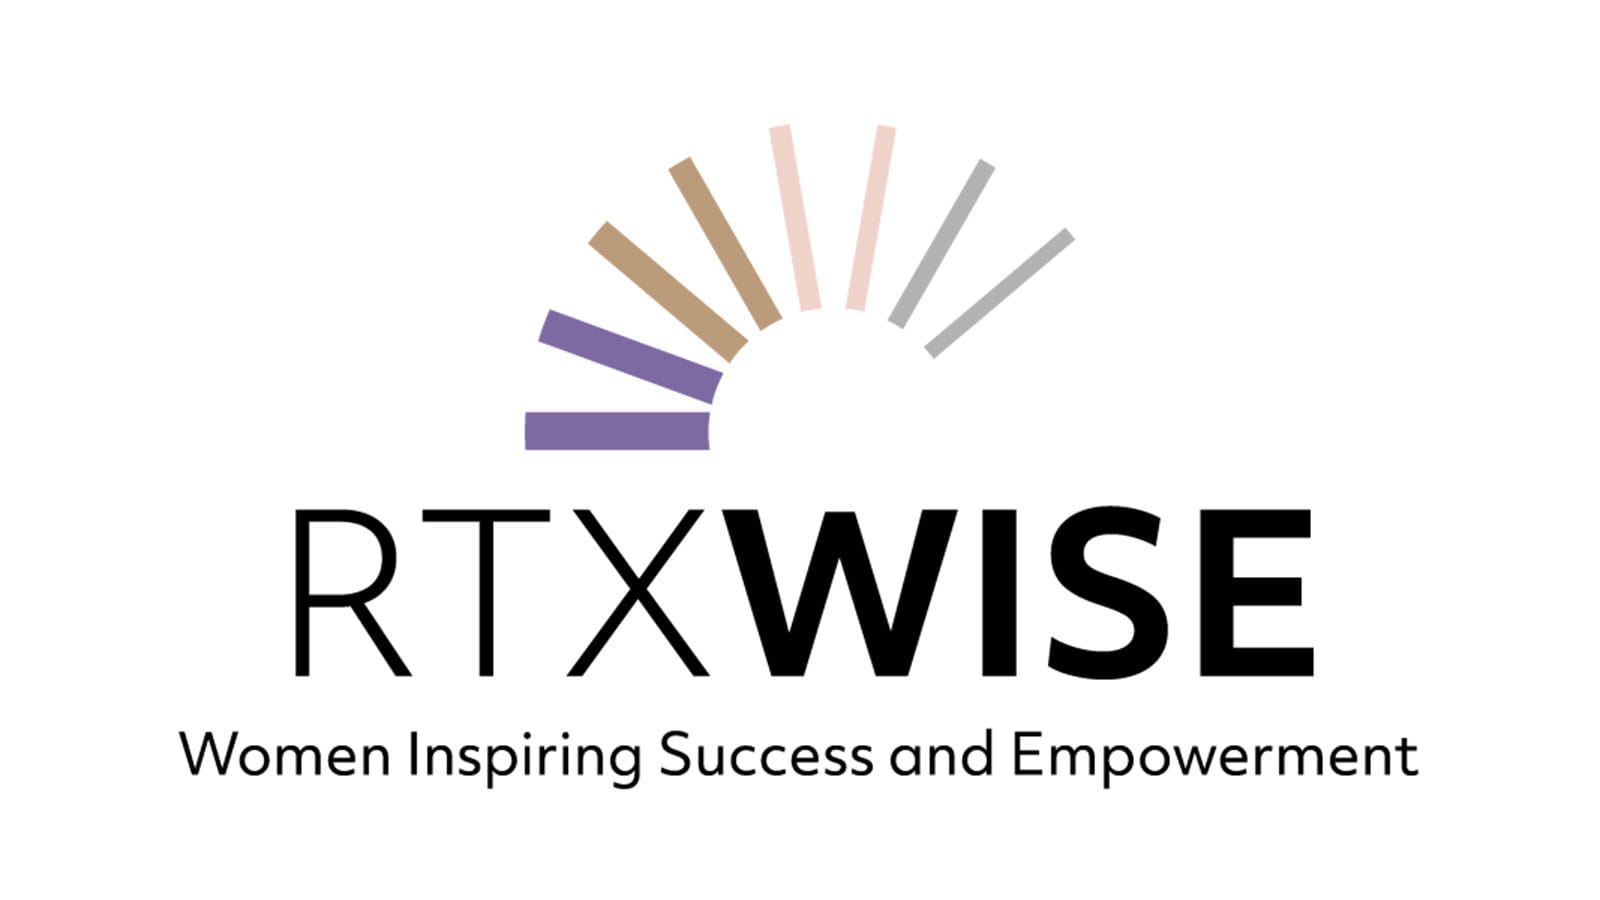 RTXWISE women inspiring success and empowerment